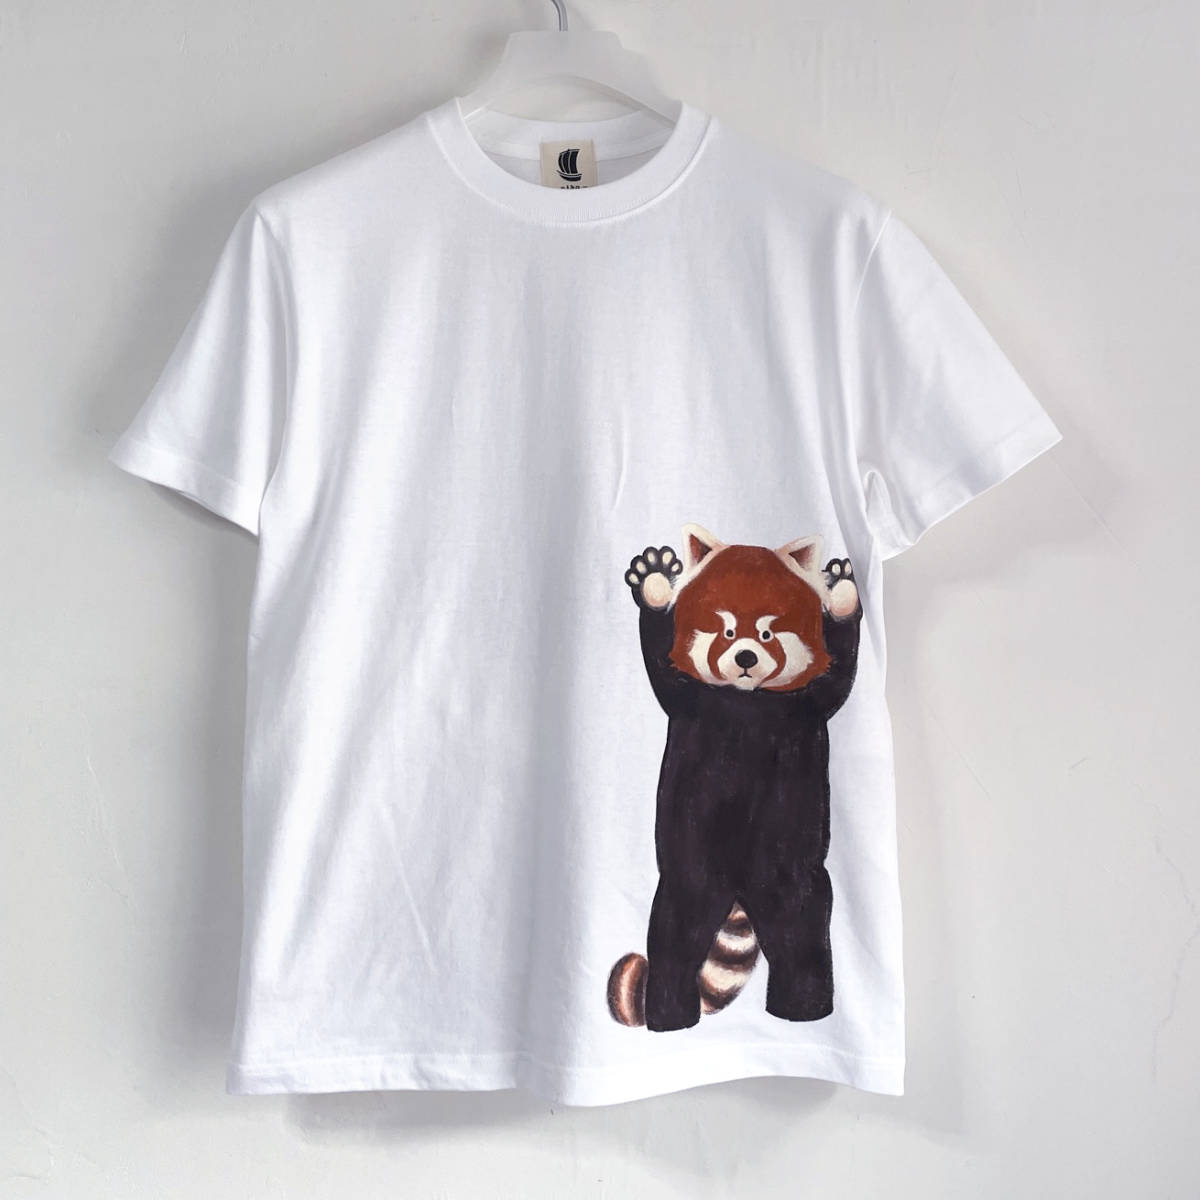 Men's T-shirt, size L, white, Lesser Pan pattern T-shirt, white, handmade, hand-painted T-shirt, animal, Large size, Crew neck, Patterned